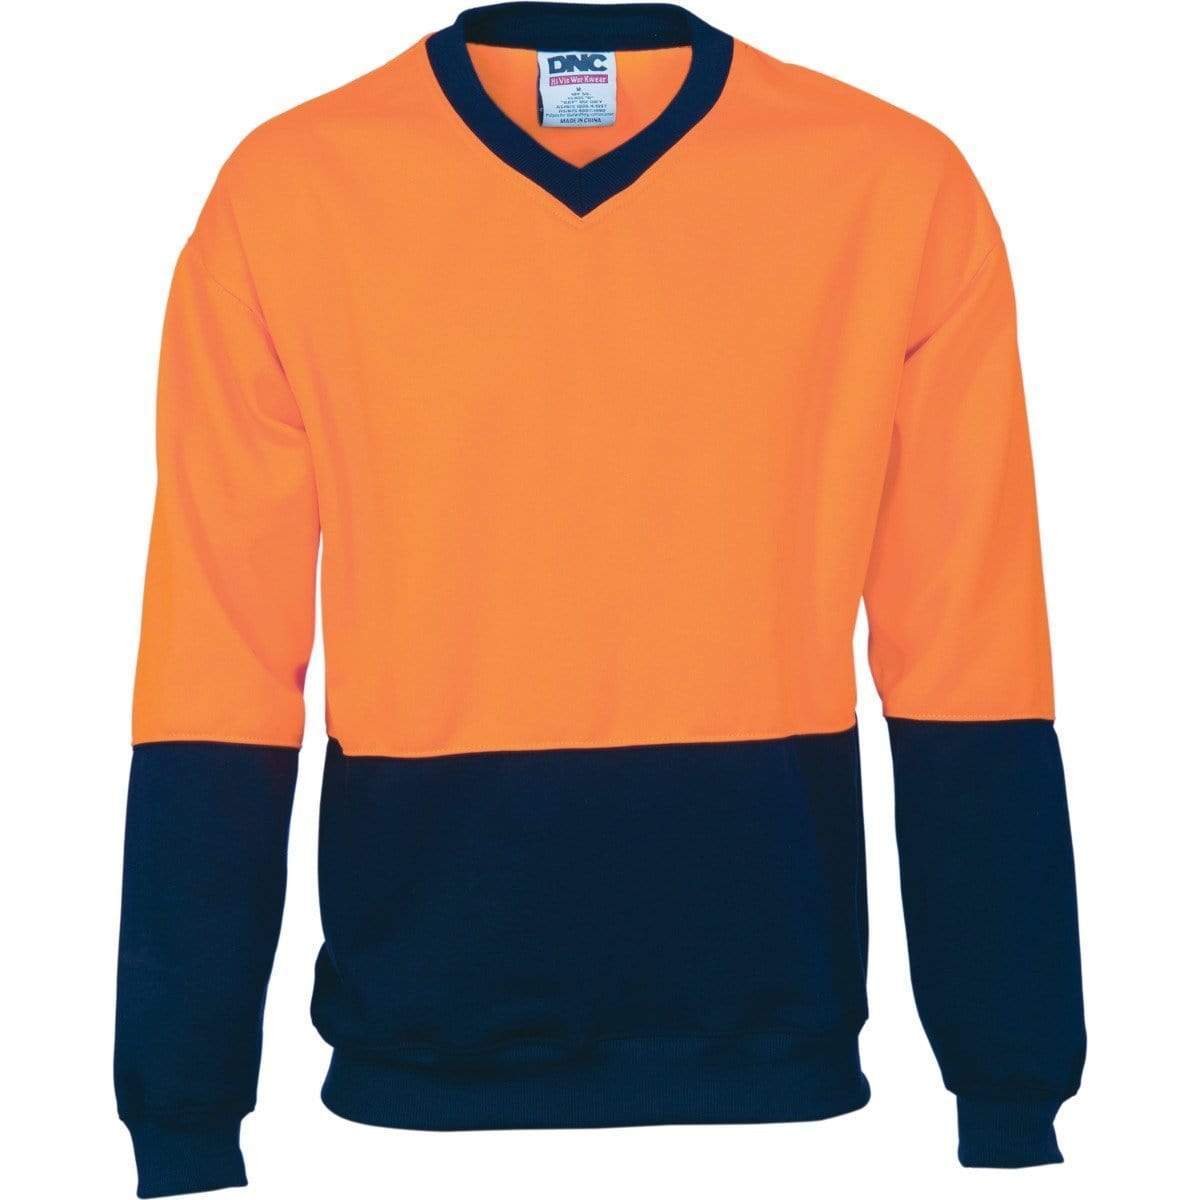 Dnc Workwear Hi-vis Two-tone Fleecy V-neck Sweatshirt (Sloppy Joe) - 3822 Work Wear DNC Workwear Orange/Navy XS 